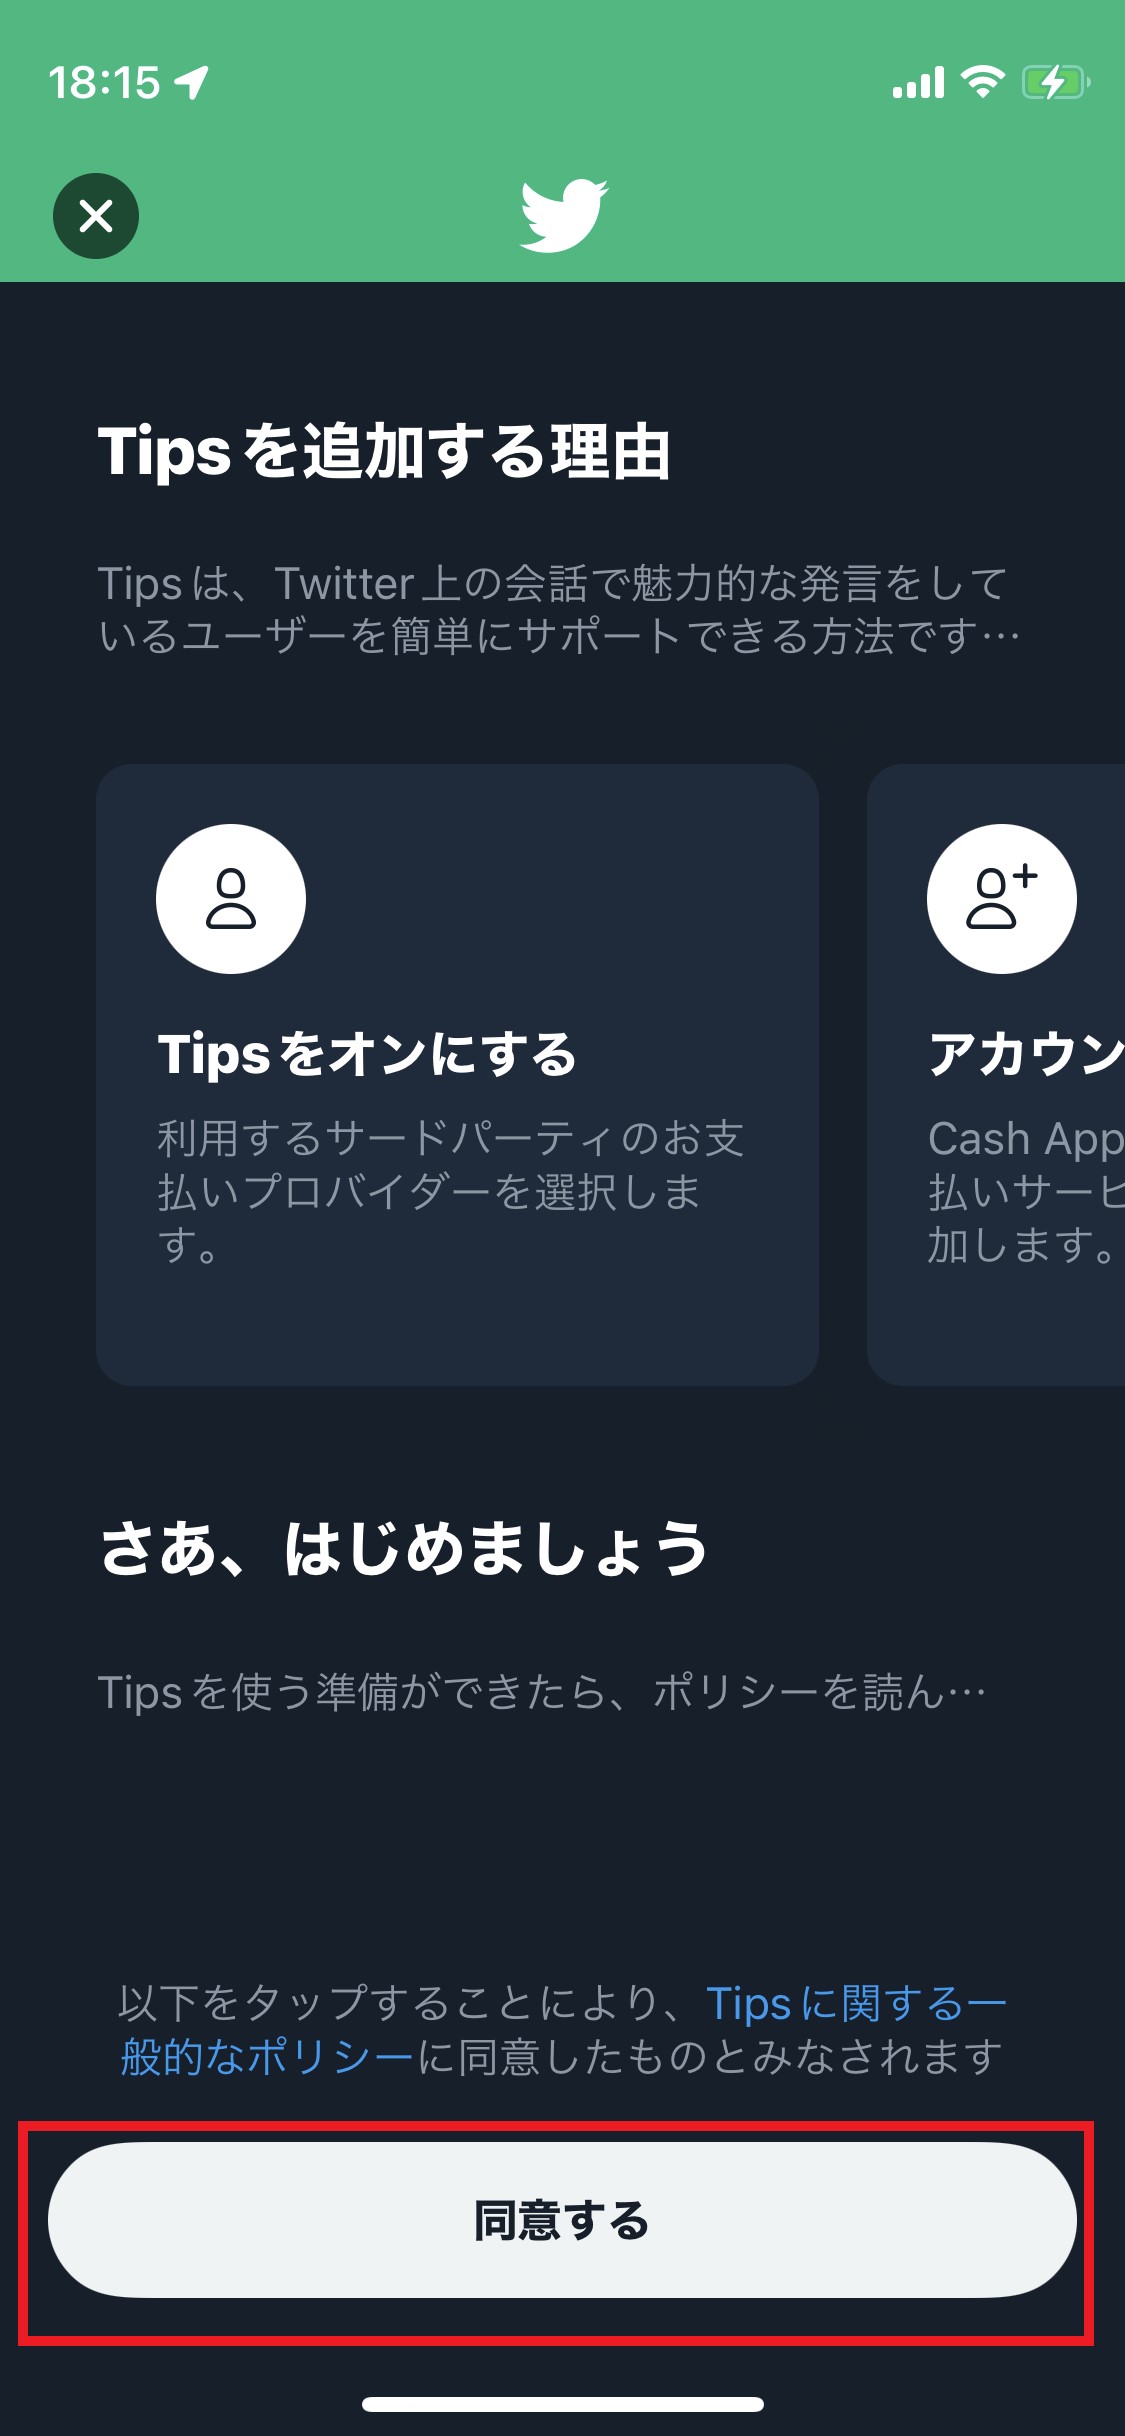 Tips in Twitter4